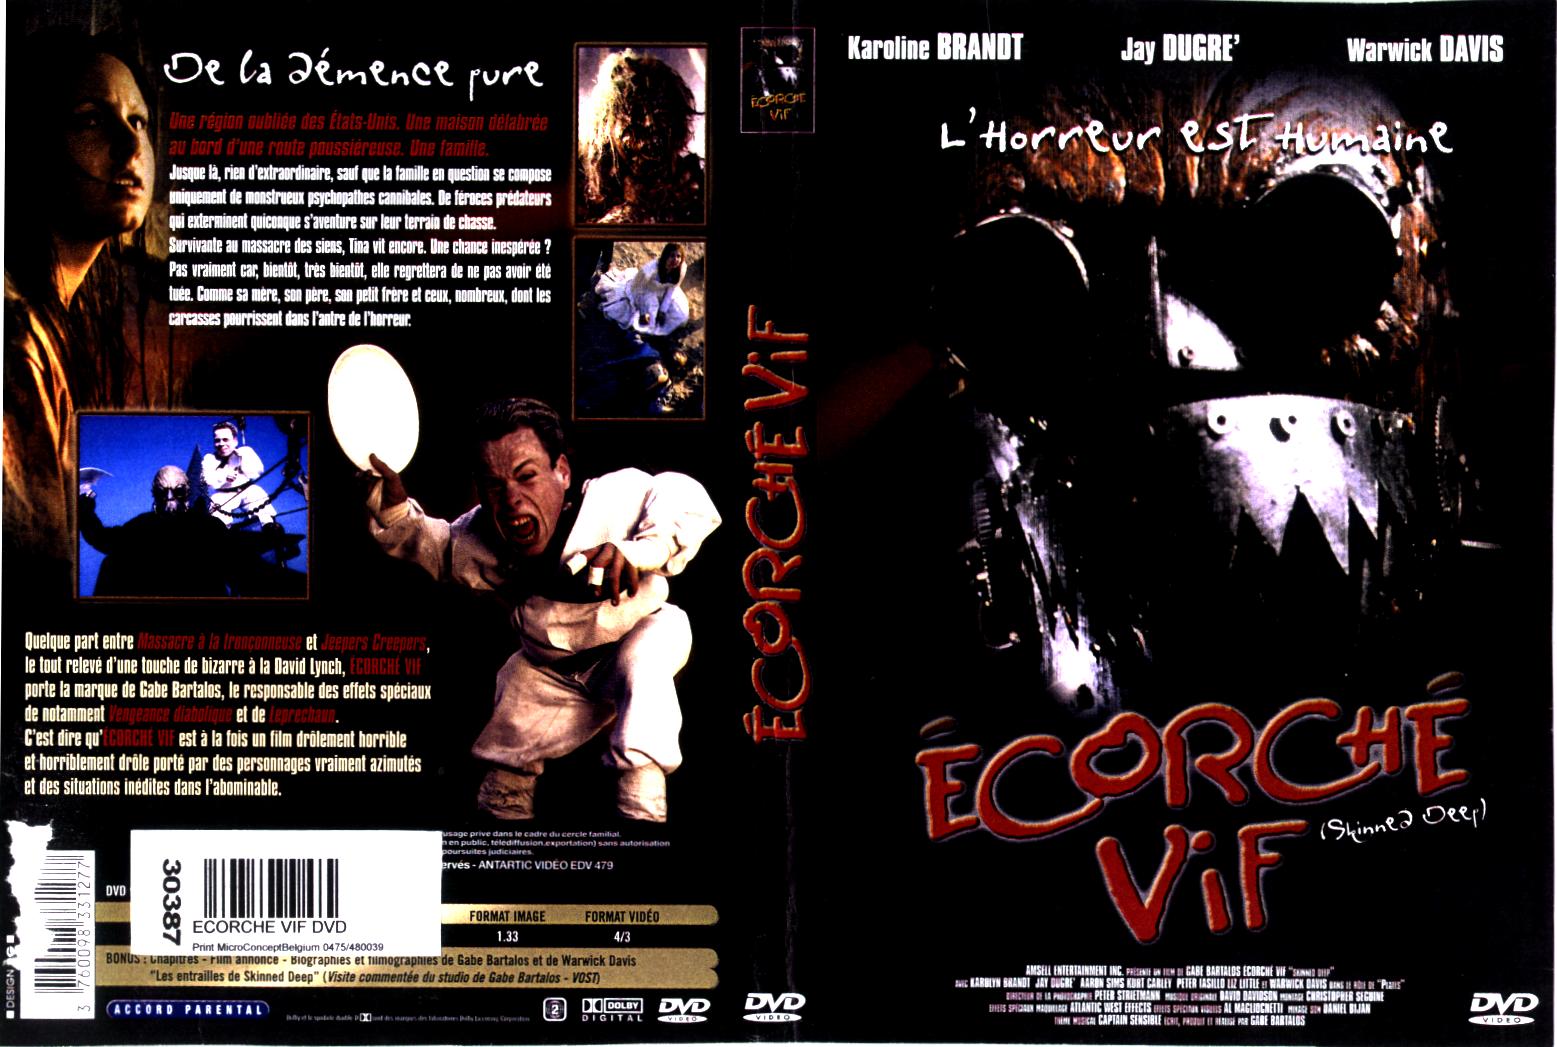 Jaquette DVD Ecorch vif